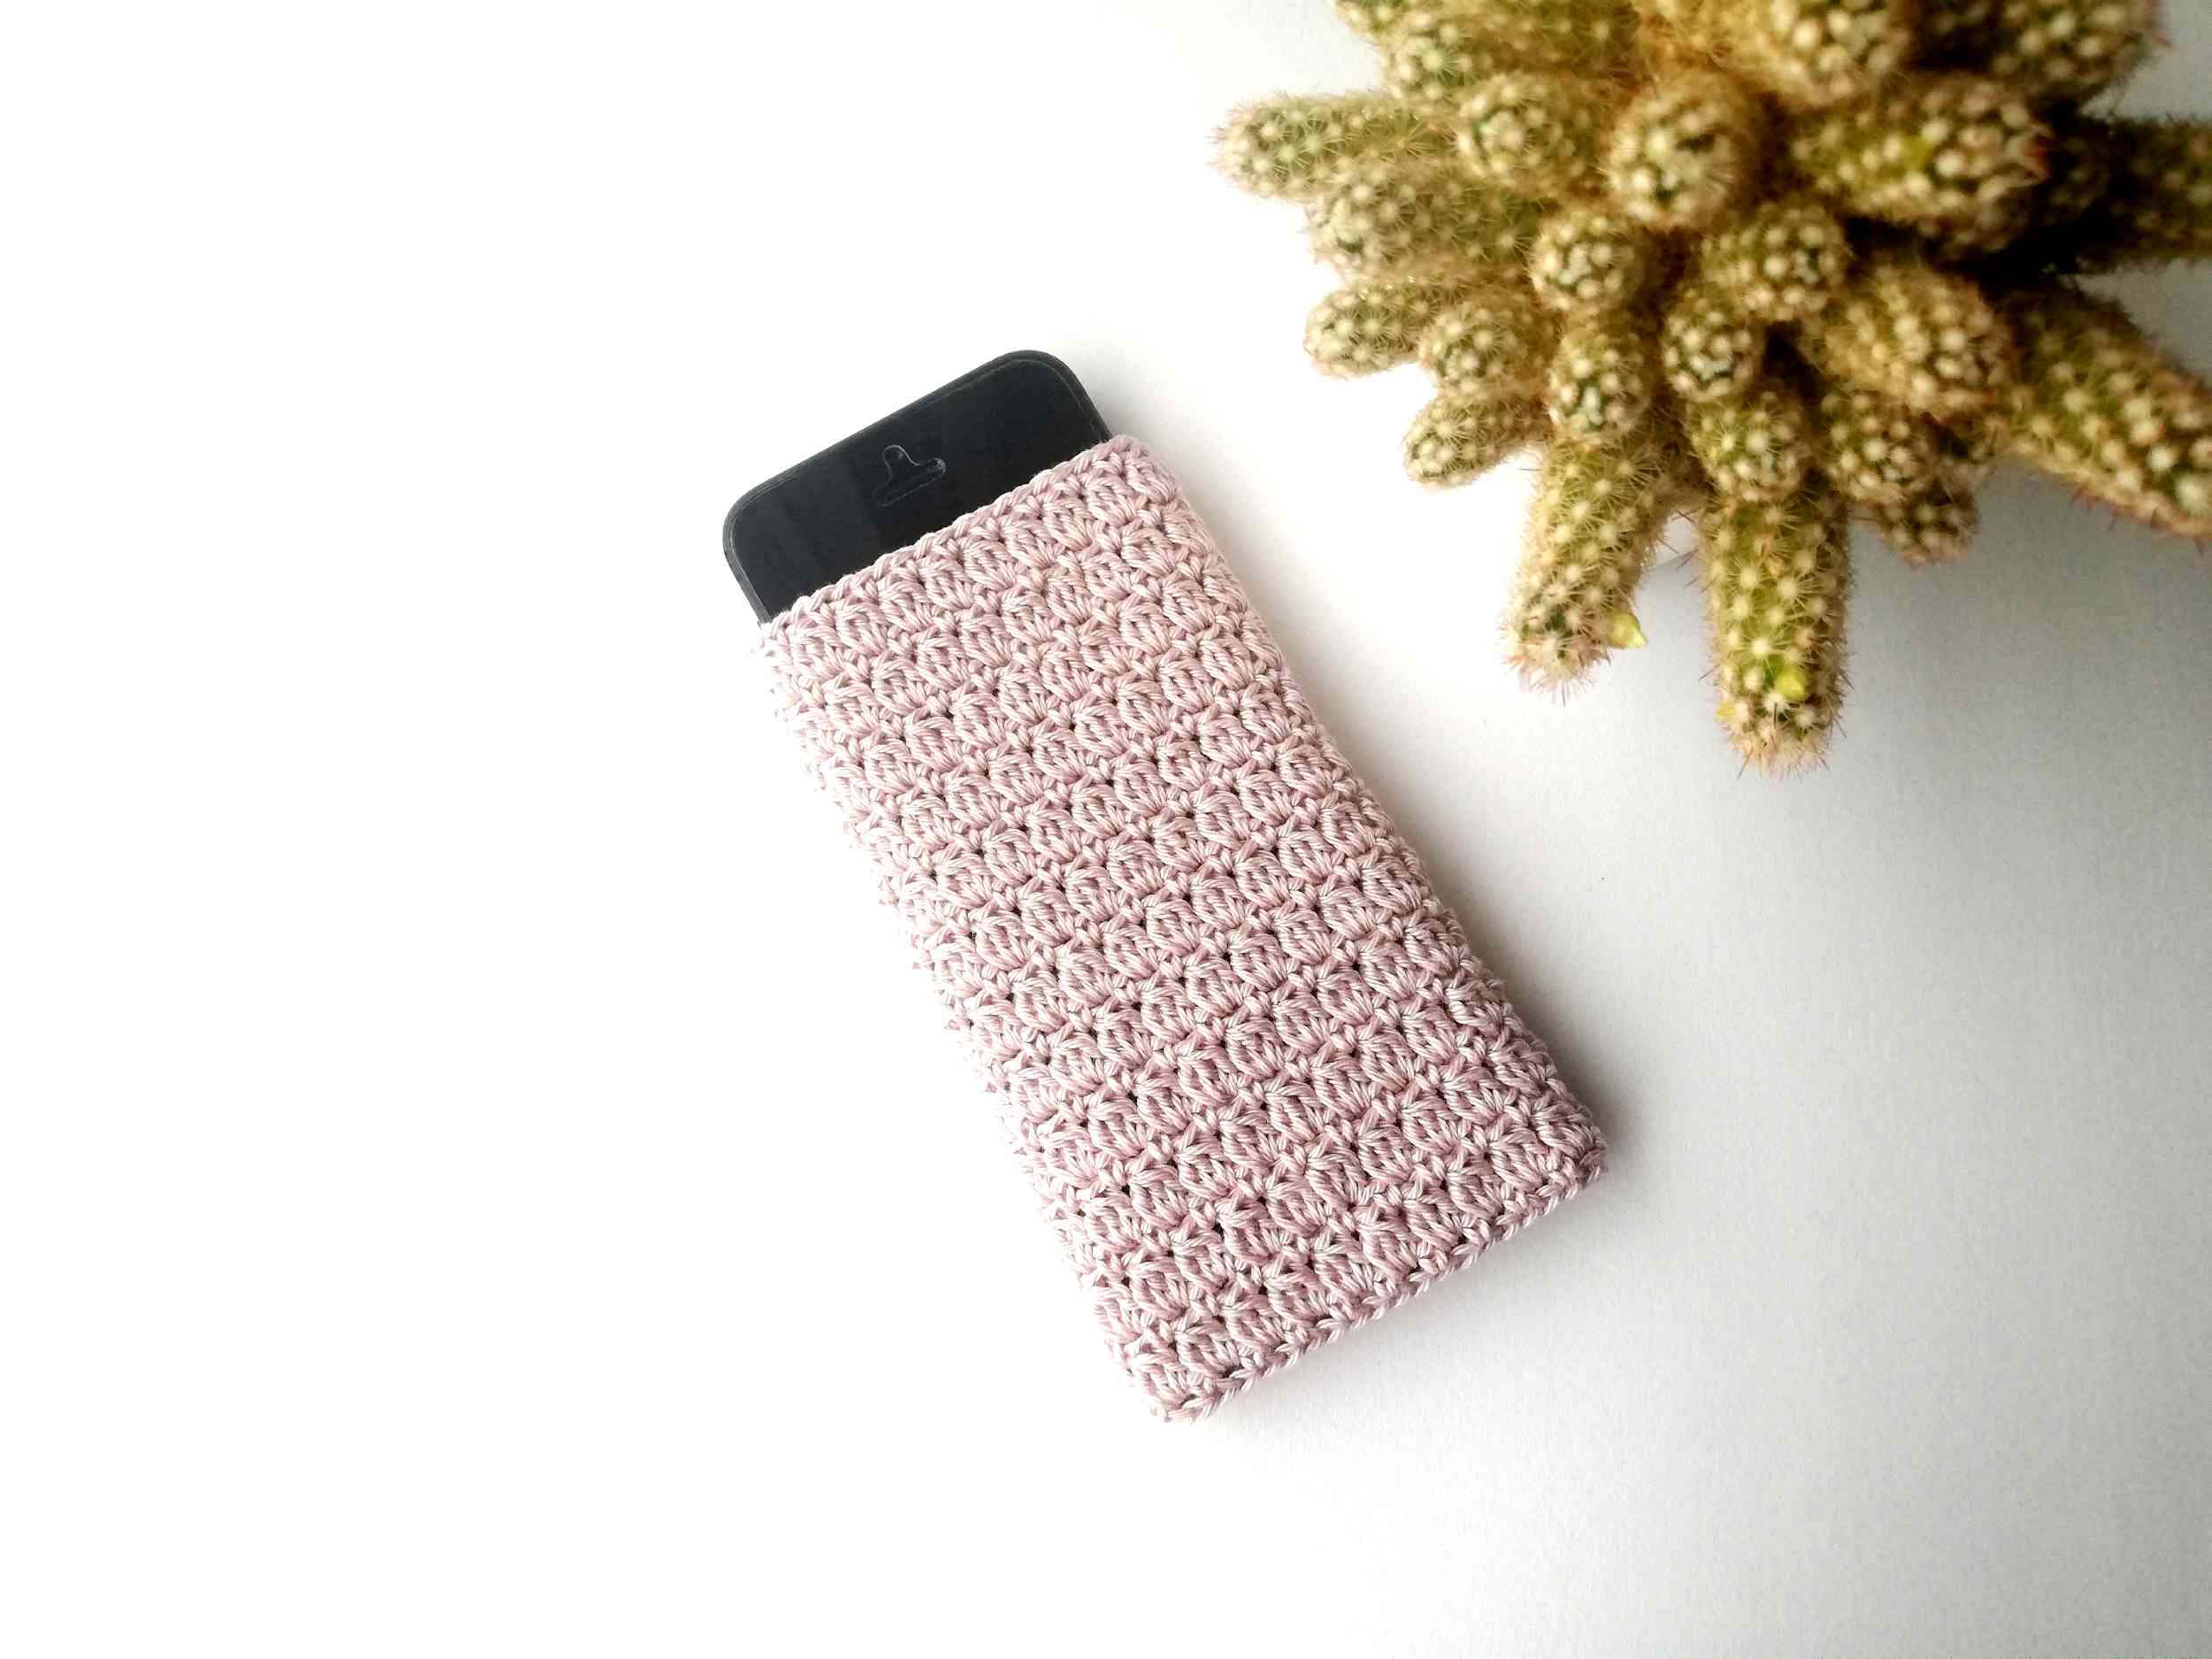 Free pattern: Crochet phone case Olivia